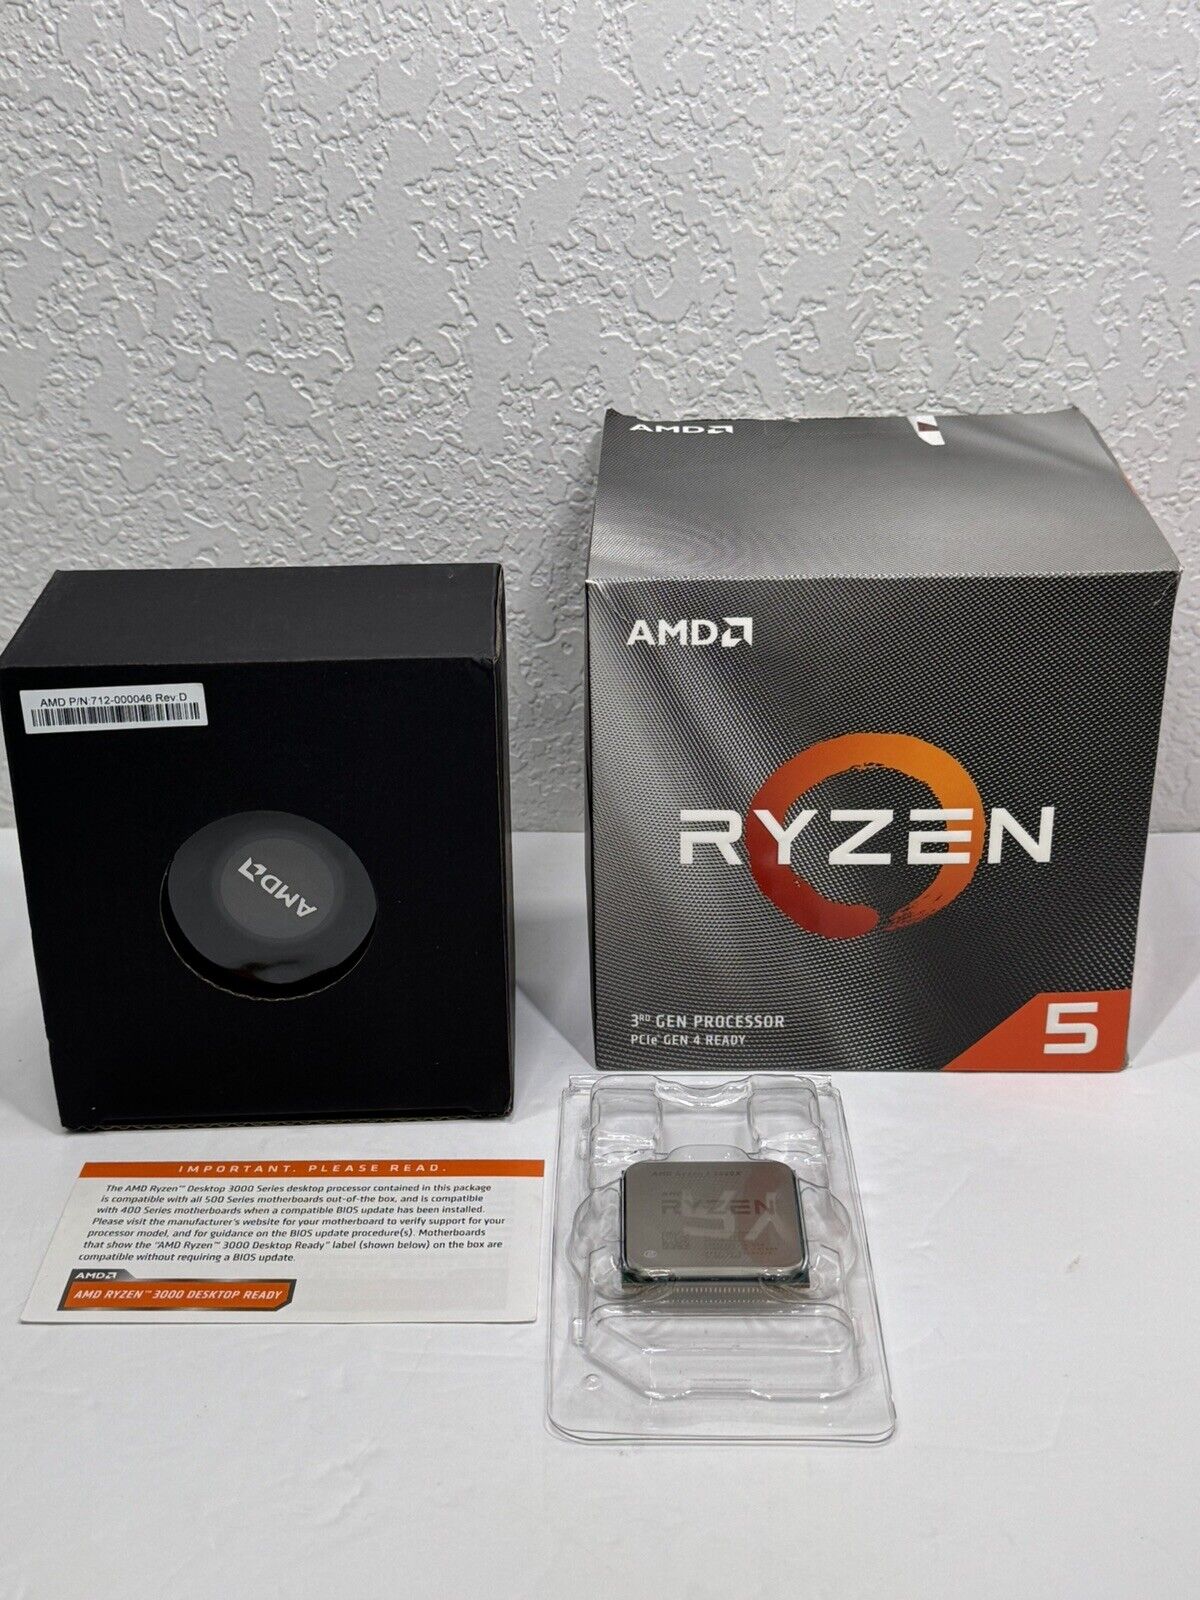 AMD Ryzen 5 3600X Processor (3.8 GHz, 6 Cores, Socket AM4) With Cooler